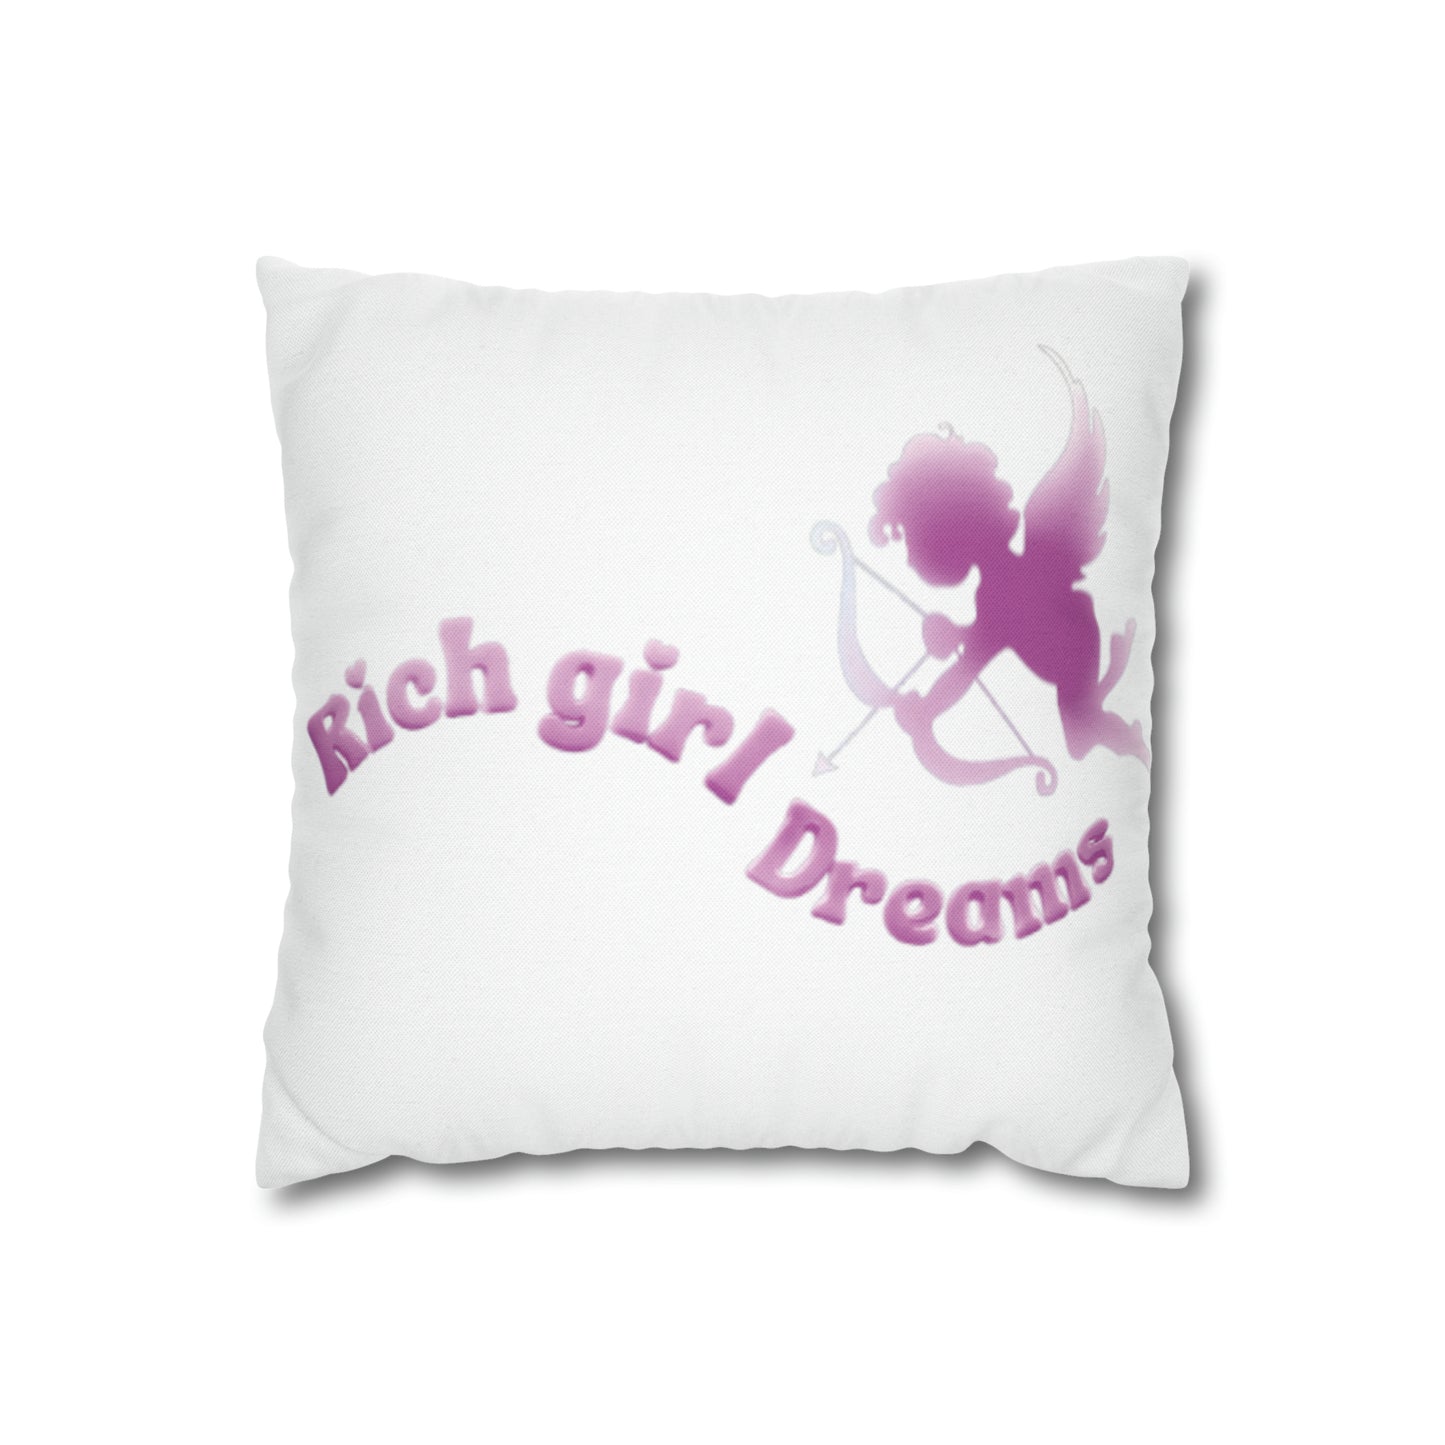 Rich Girl Dreams Square Pillow Case